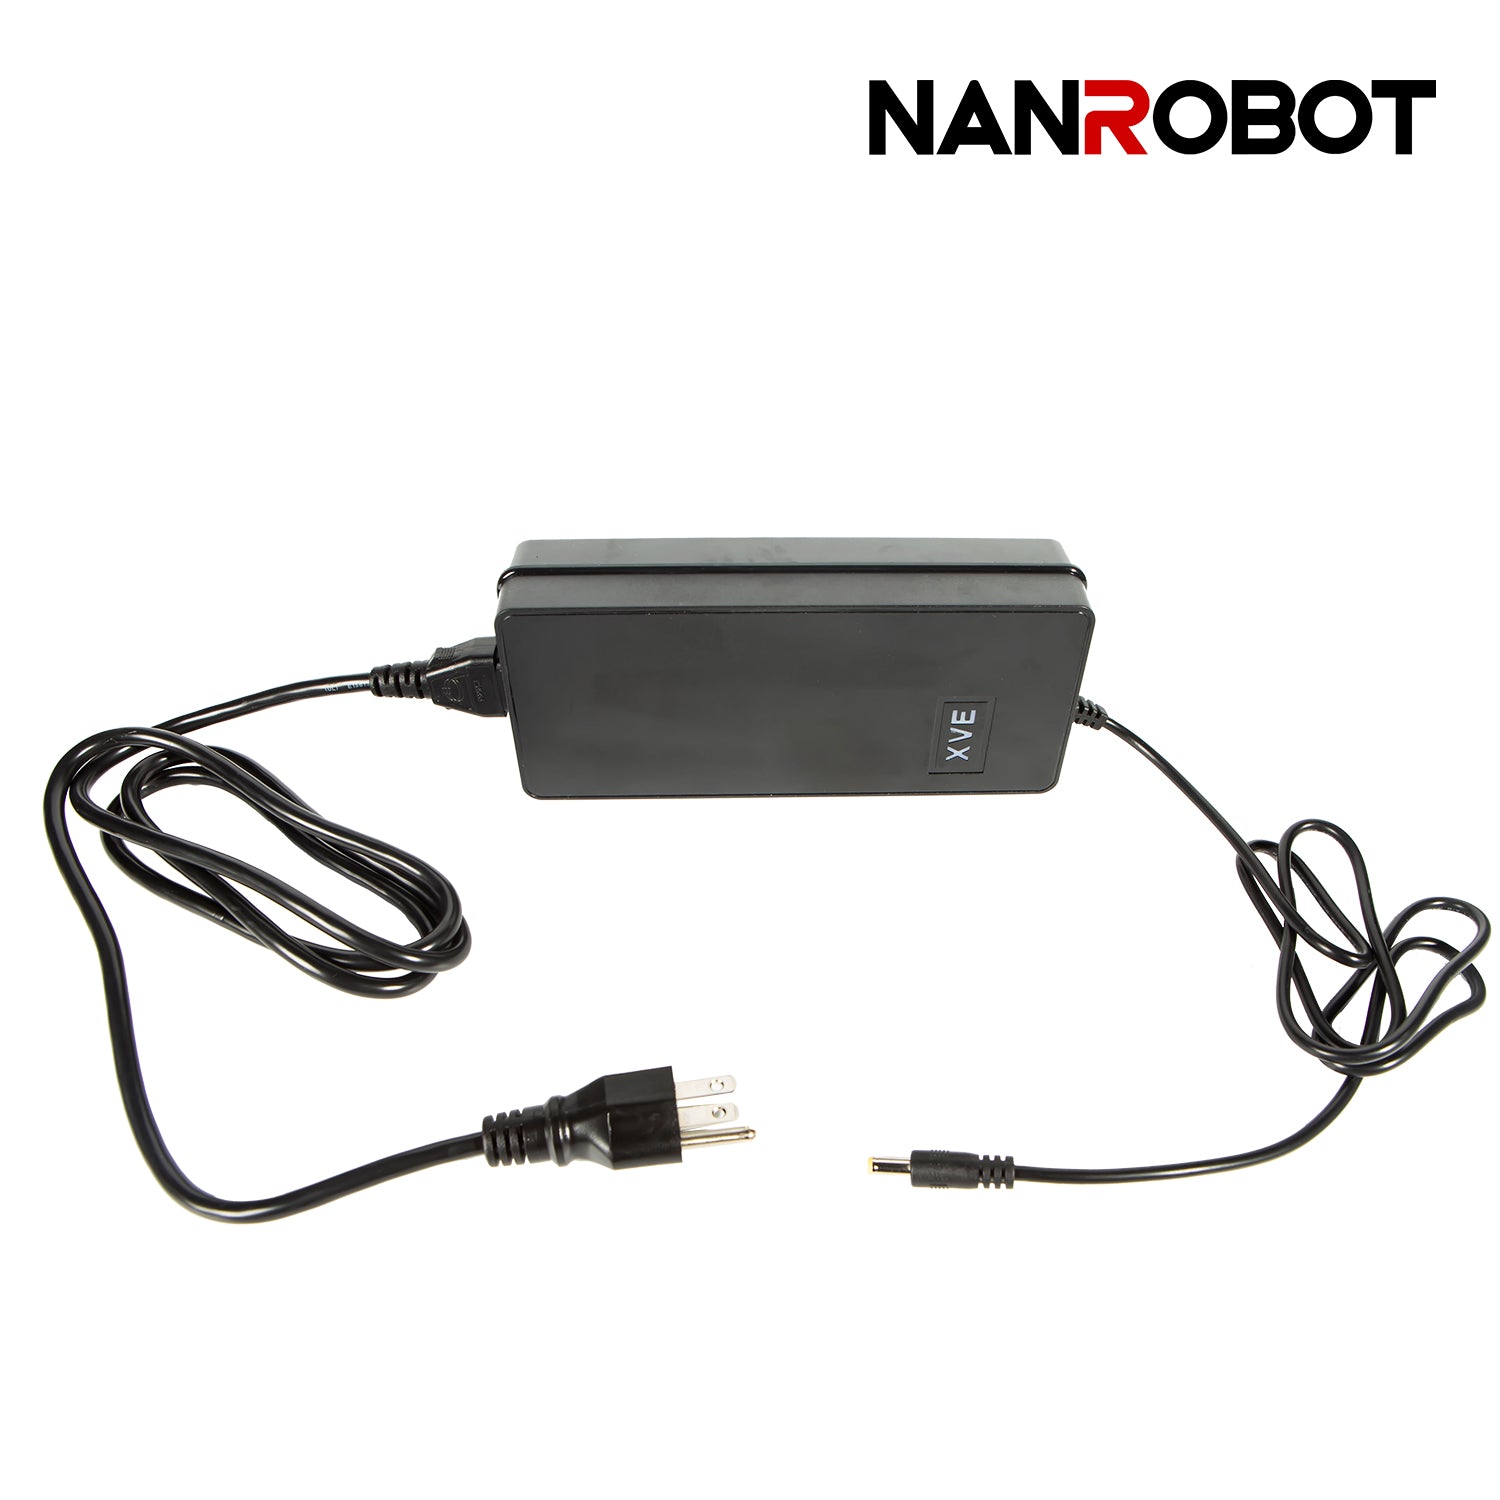 D6+ fast charger - NANROBOT